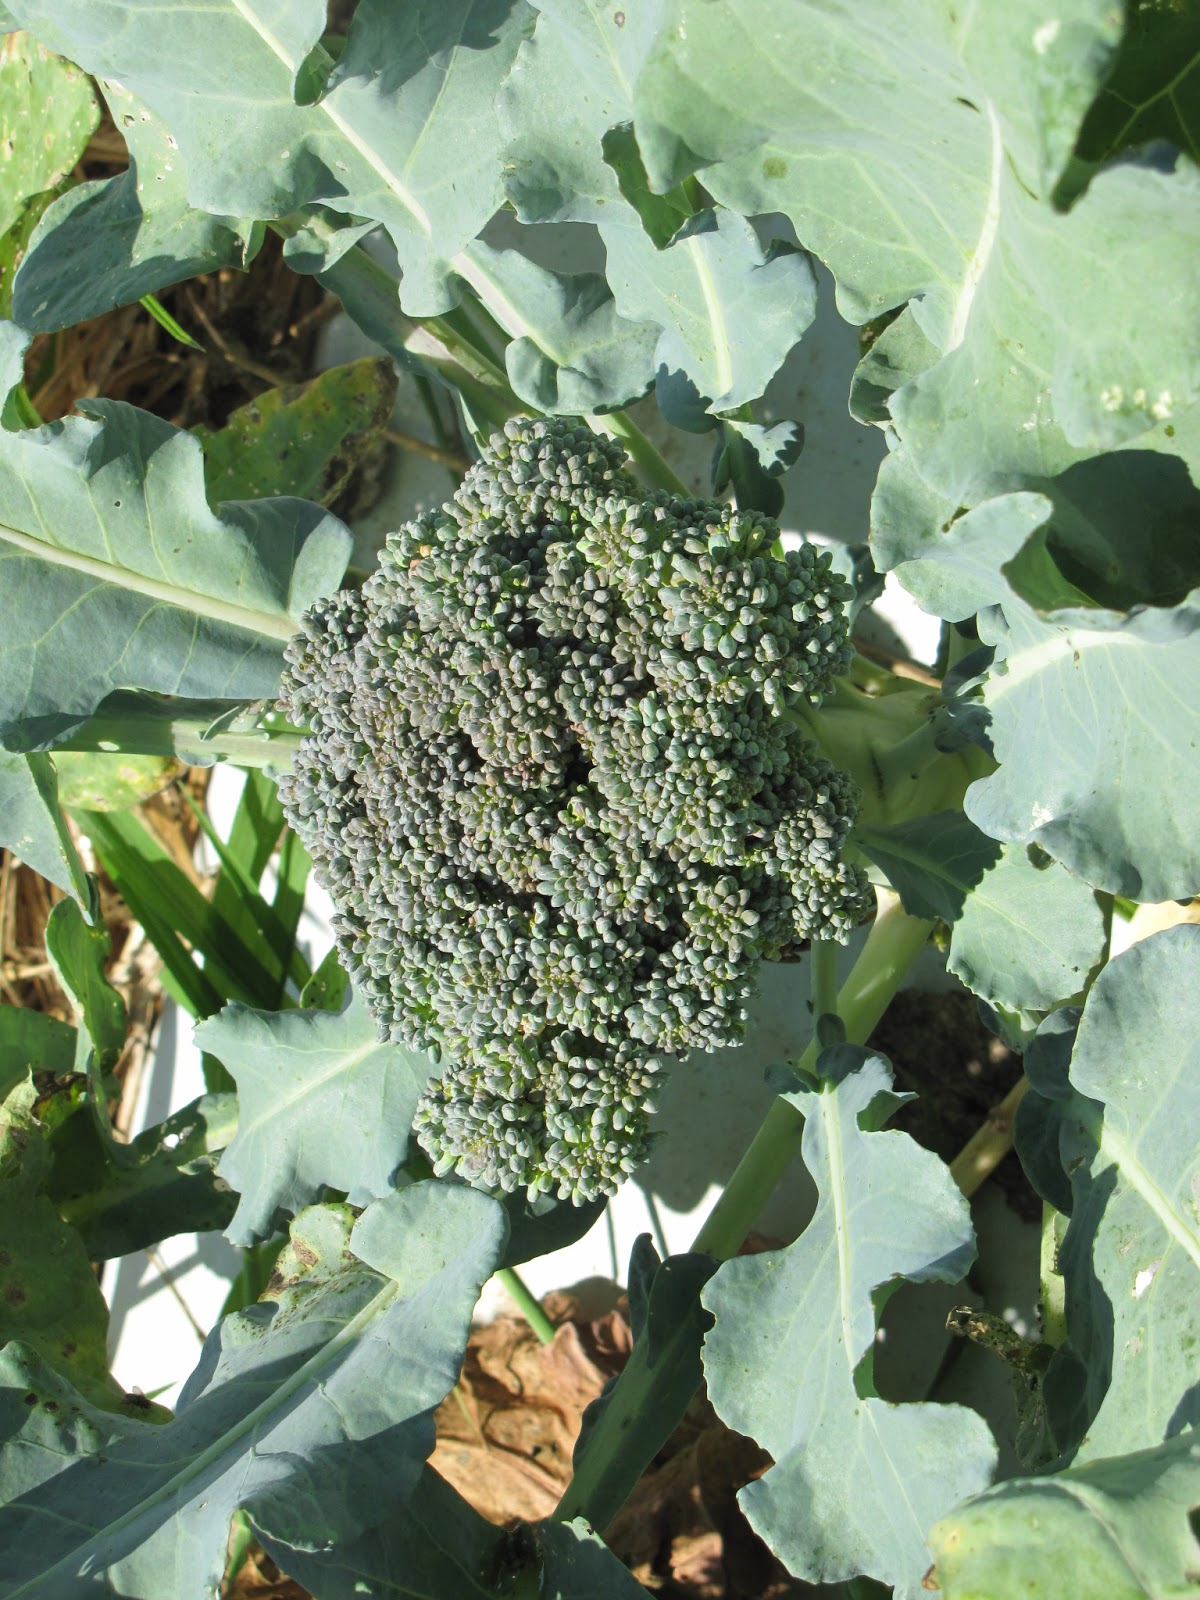 Thompson broccoli grown in 2012